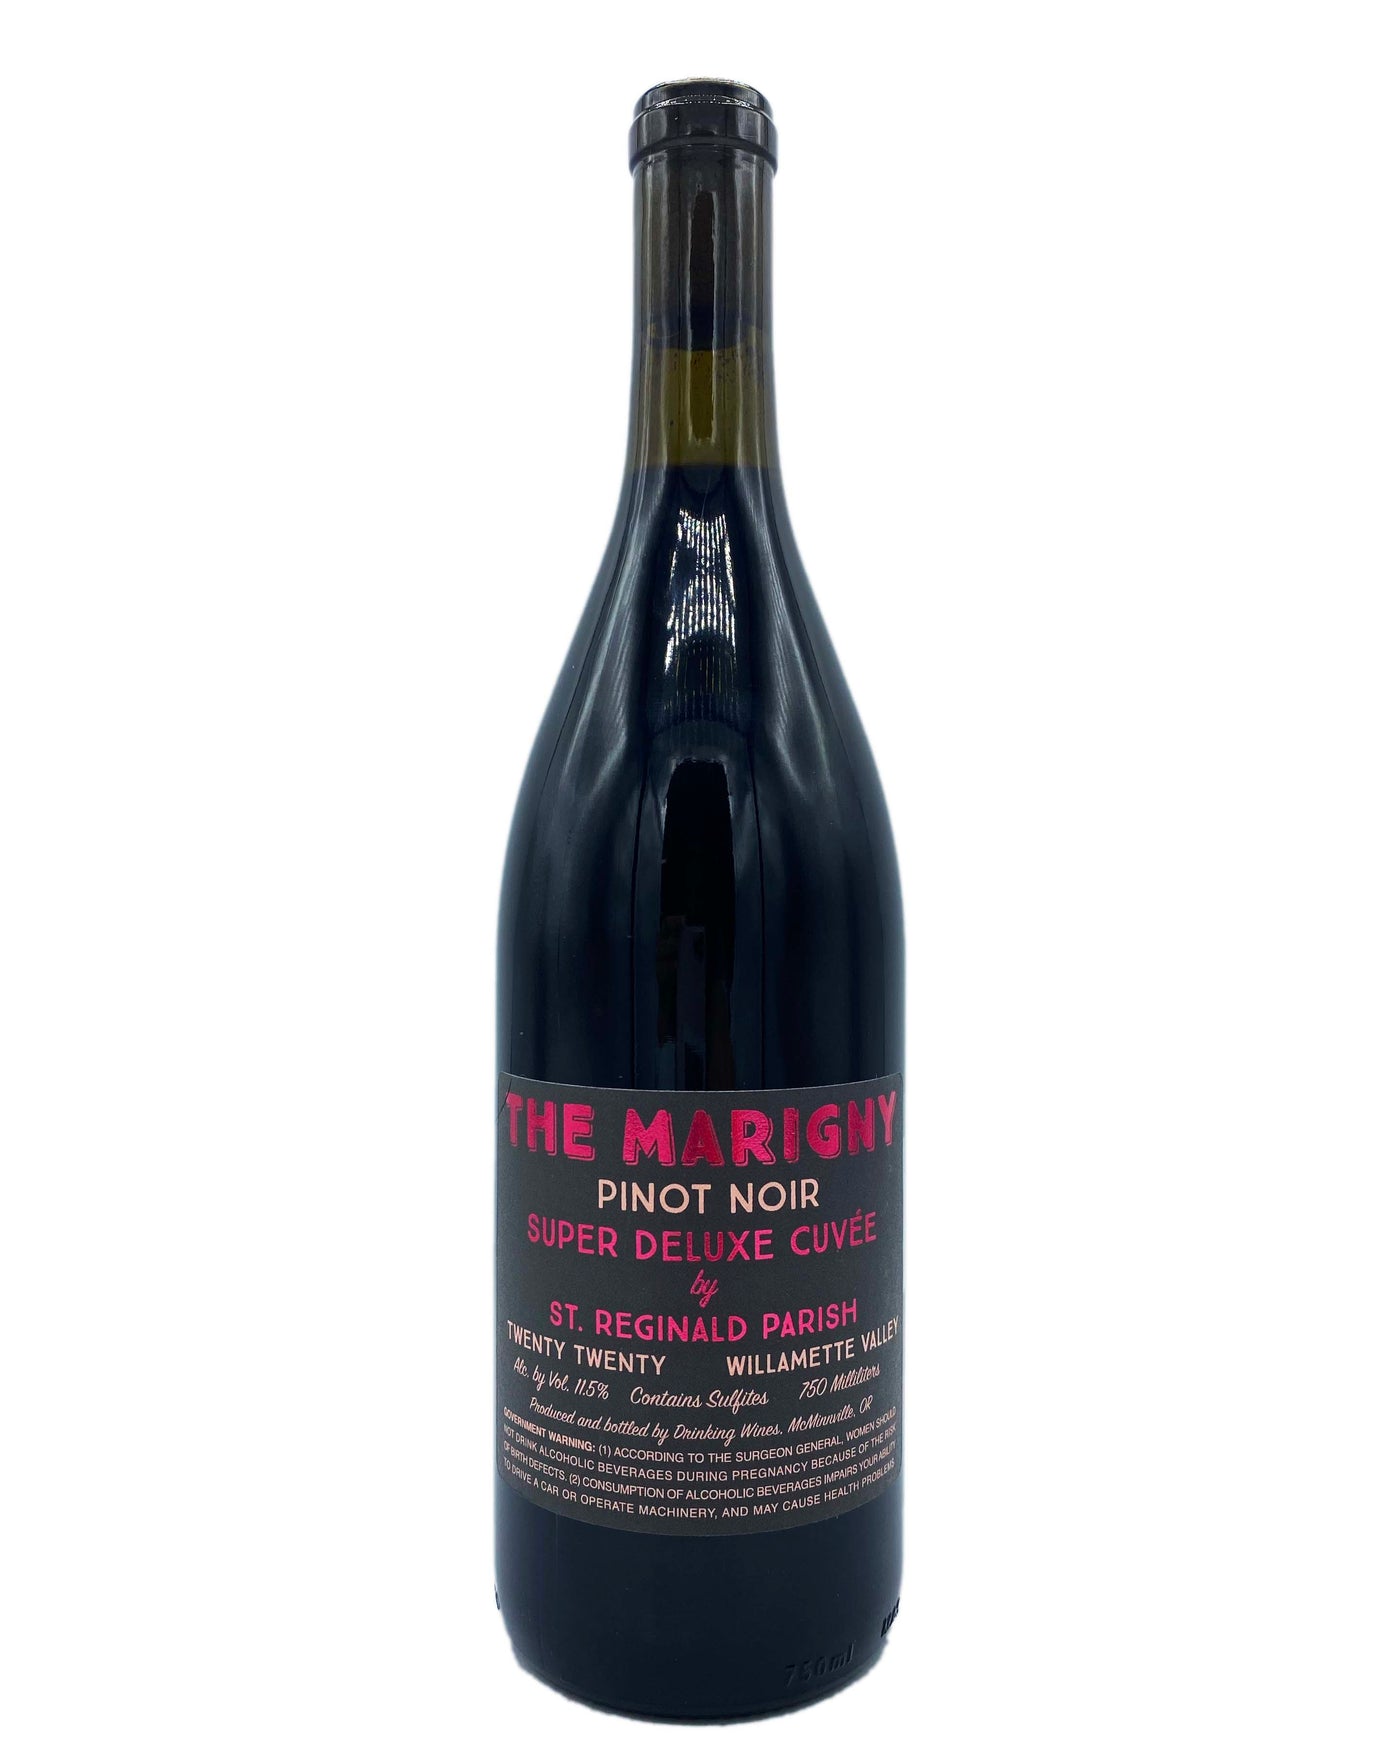 St. Reginald Parish Marigny Super Deluxe Pinot Noir NV